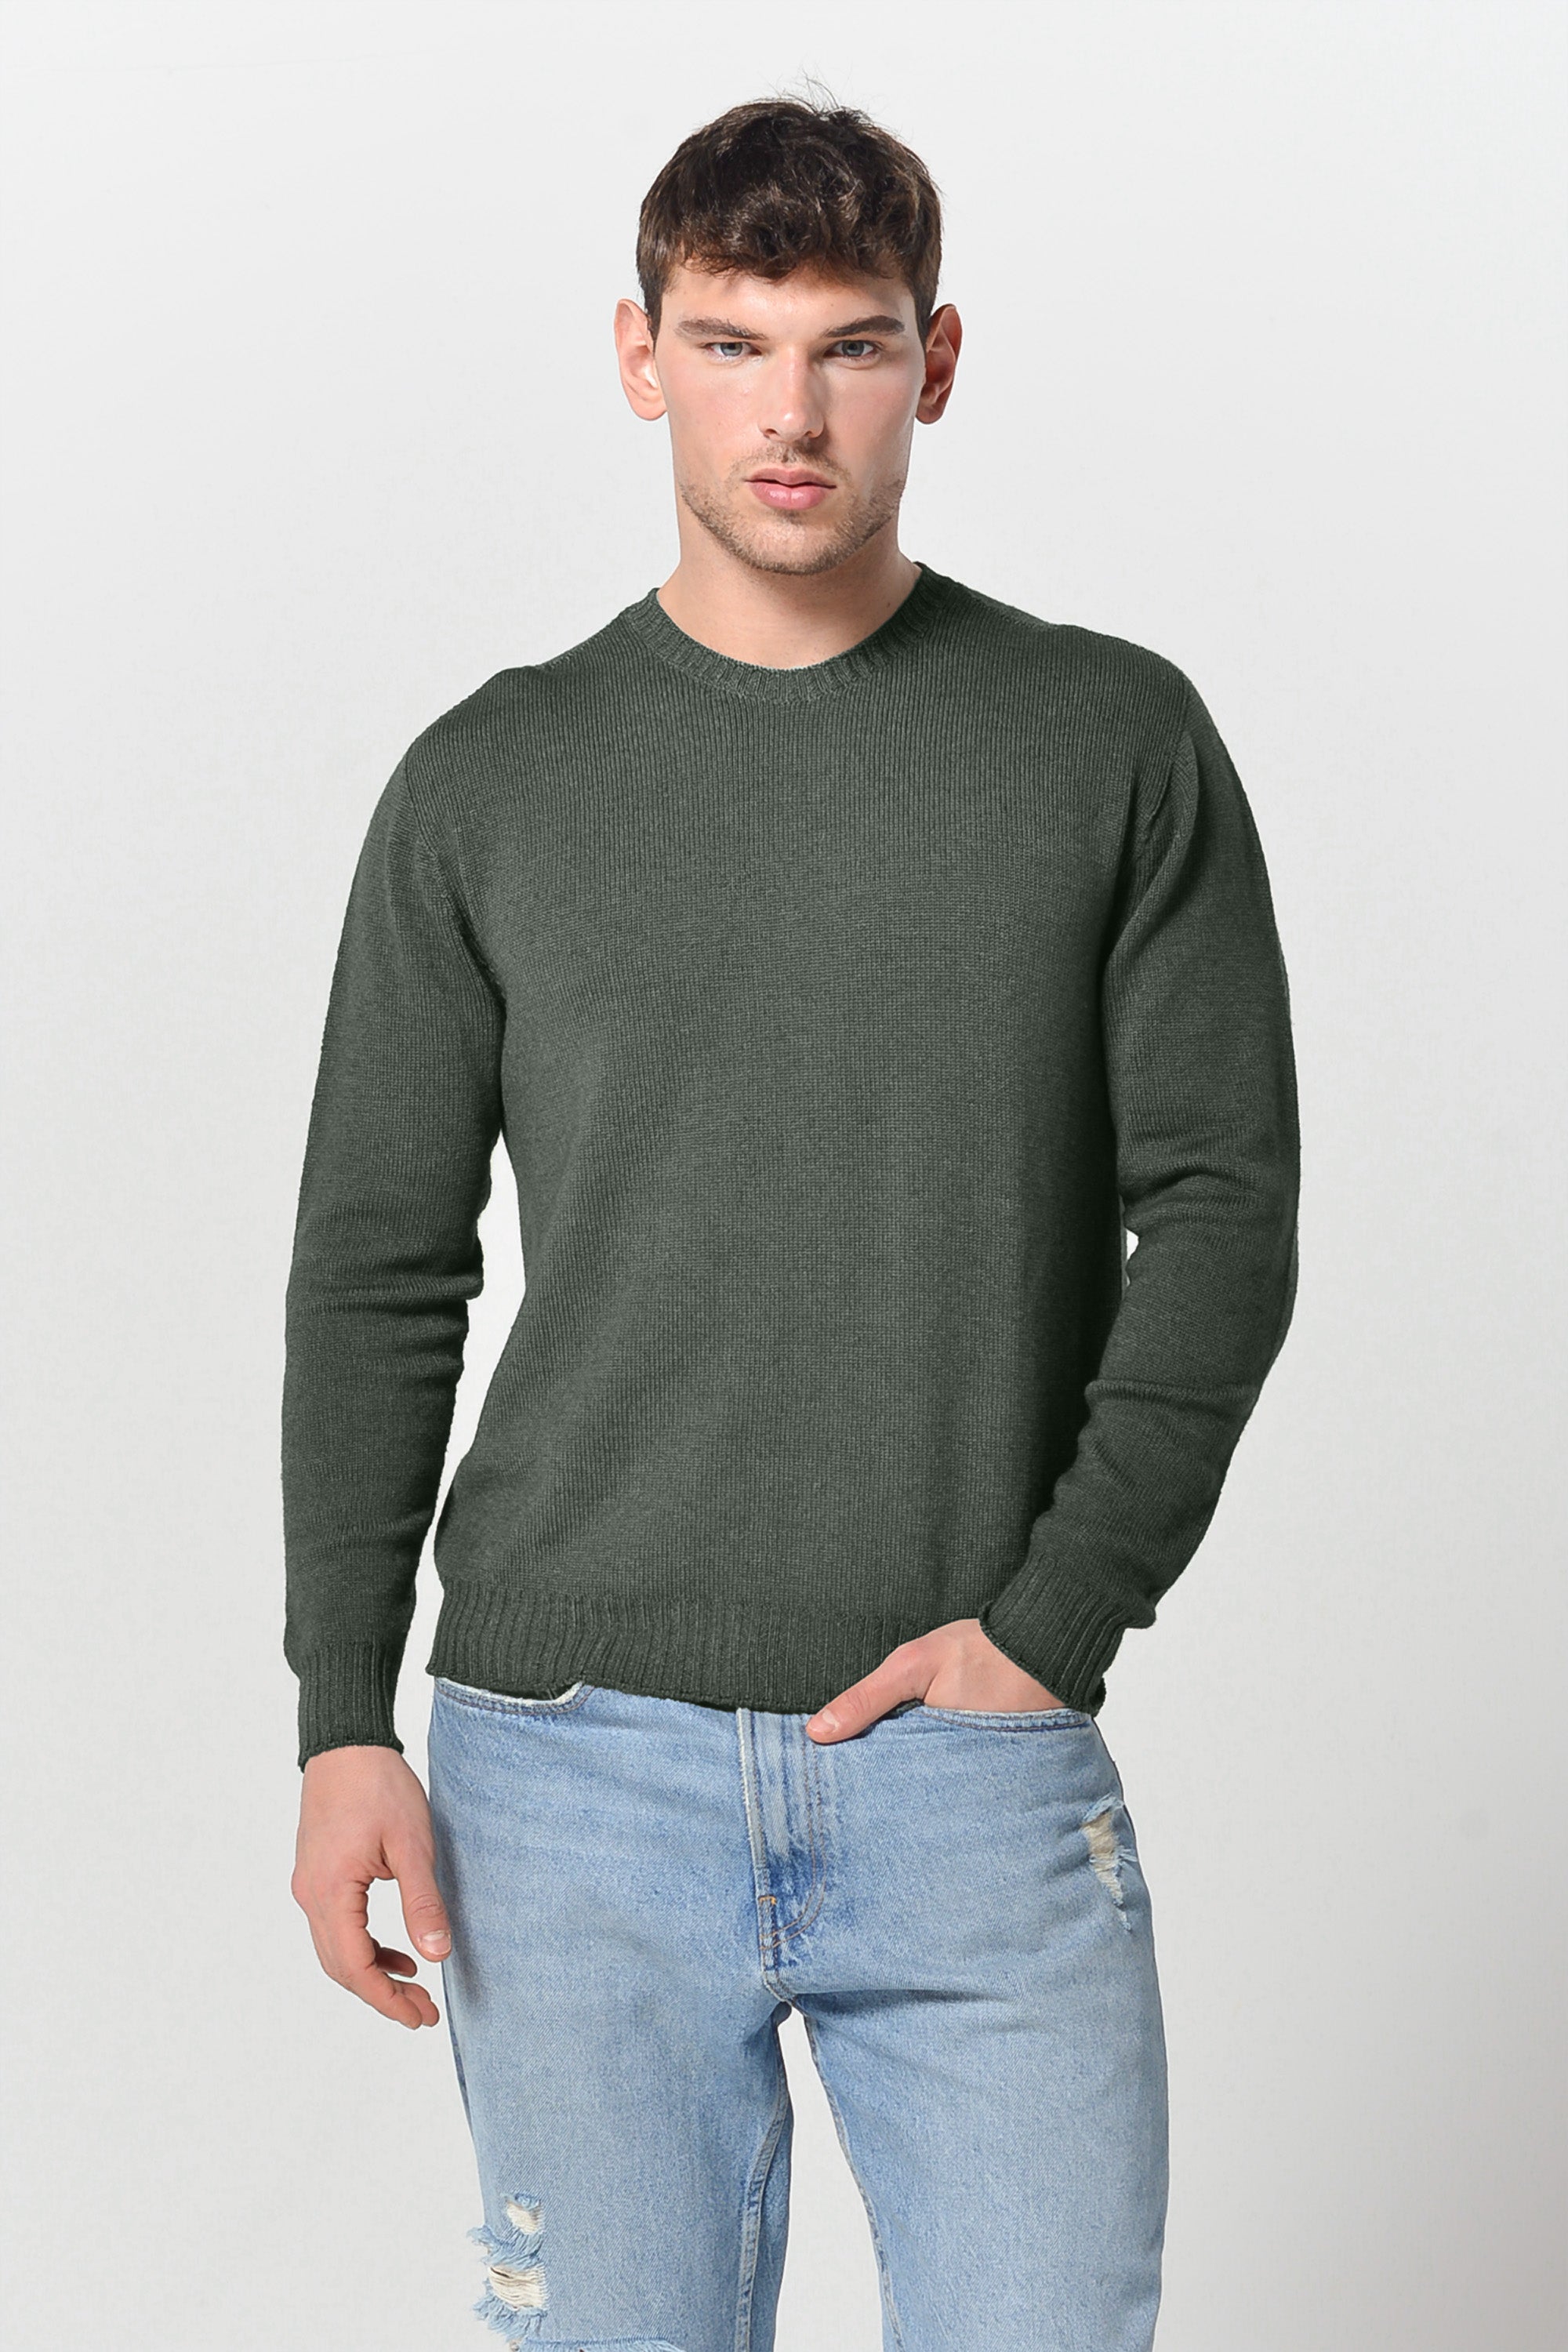 Cyr Sweater - Moss